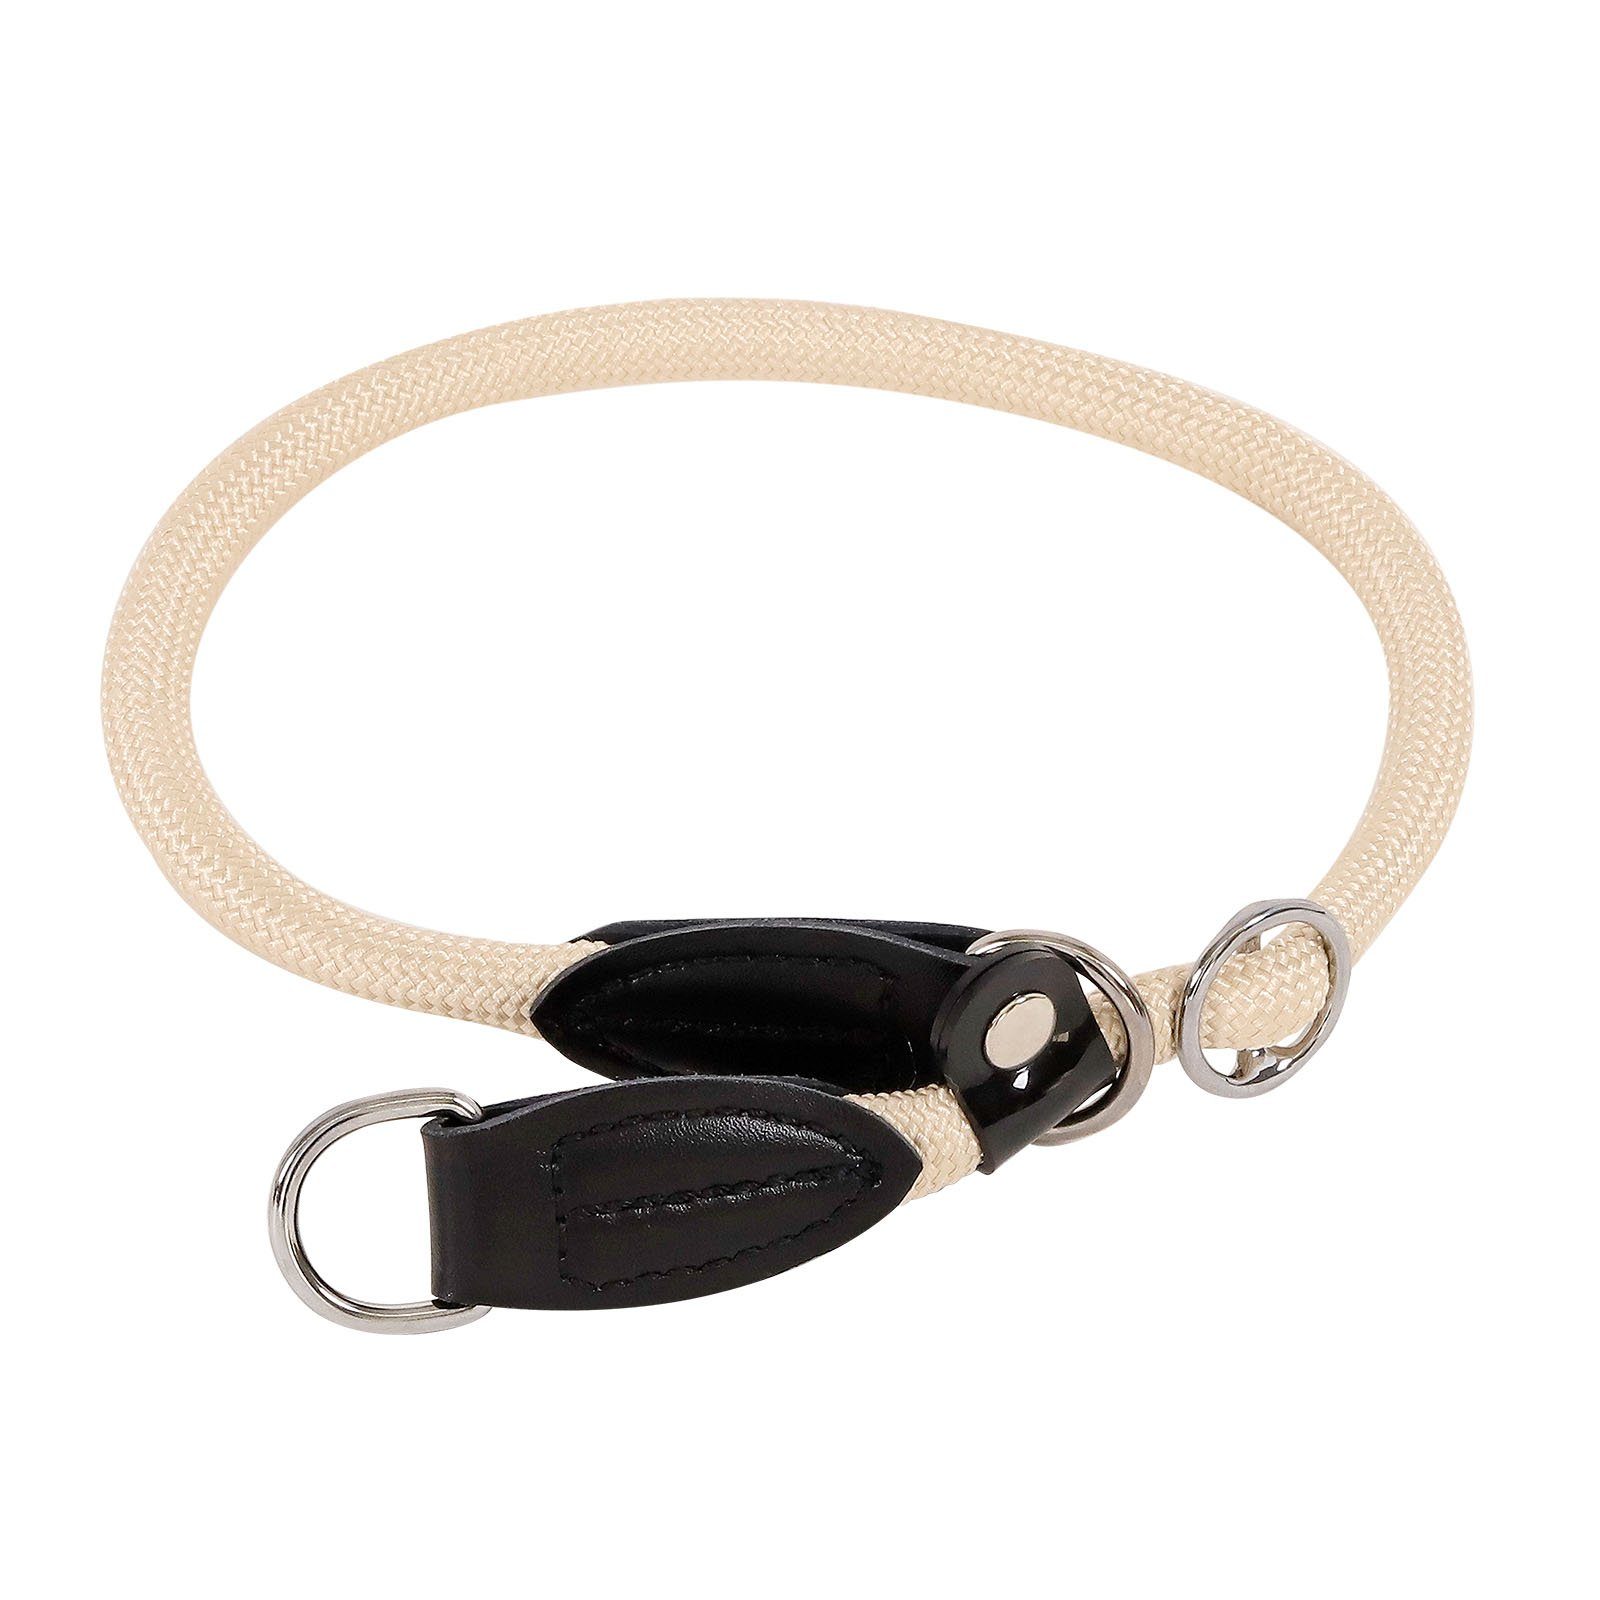 lionto Hunde-Halsband Hundehalsband mit Zugstopp, Retrieverhalsband, Nylon, 35 cm, beige